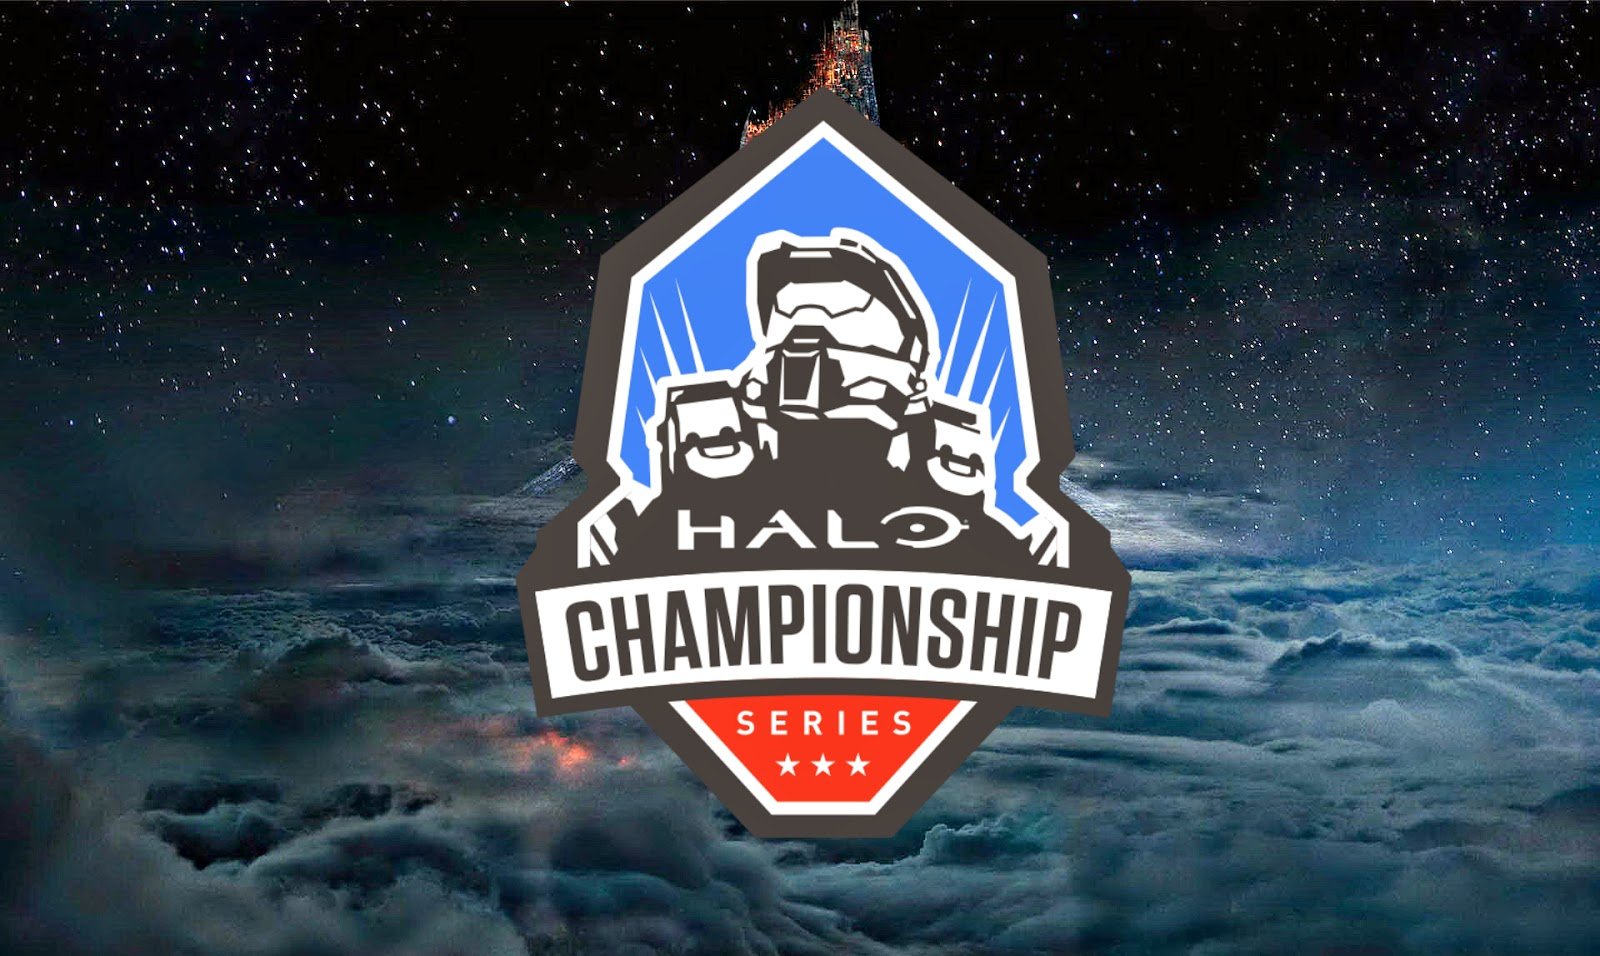 Halo-Championship-Series_0.jpg